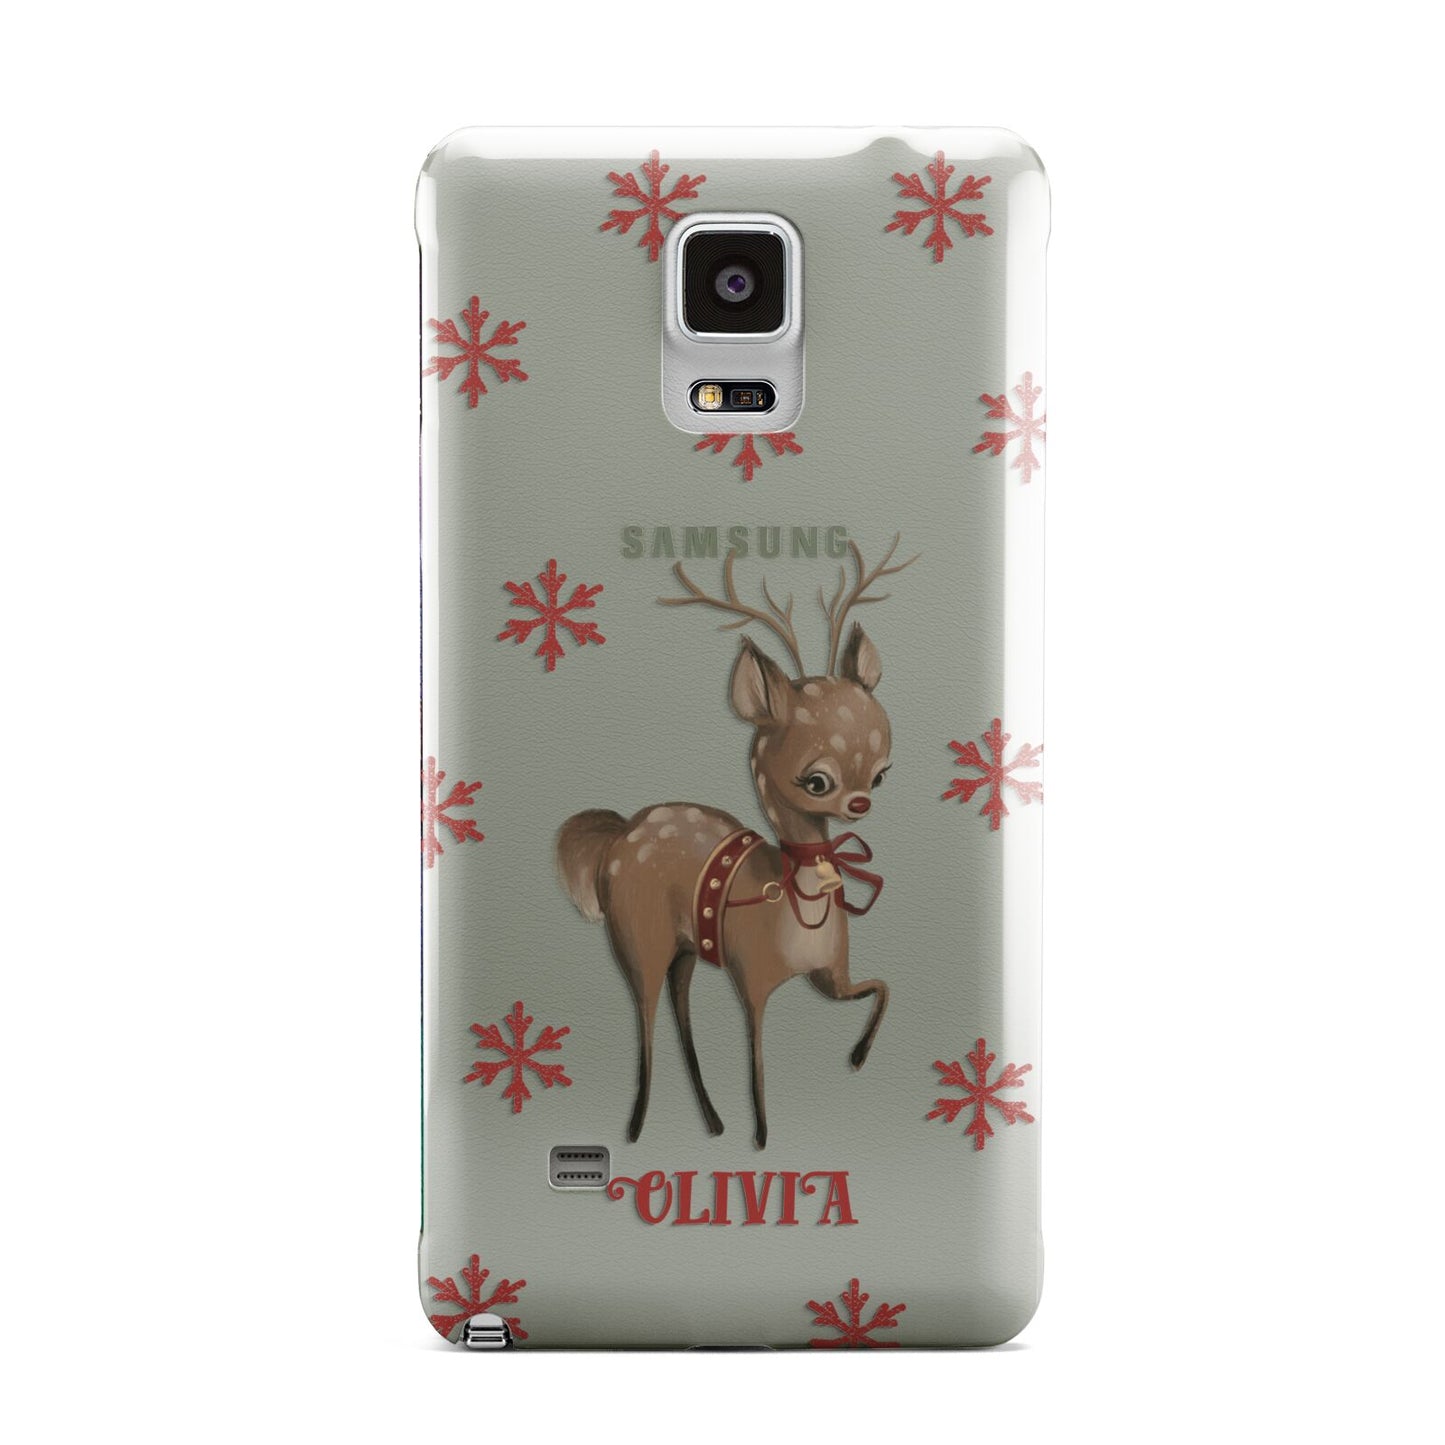 Rudolph Delivery Samsung Galaxy Note 4 Case